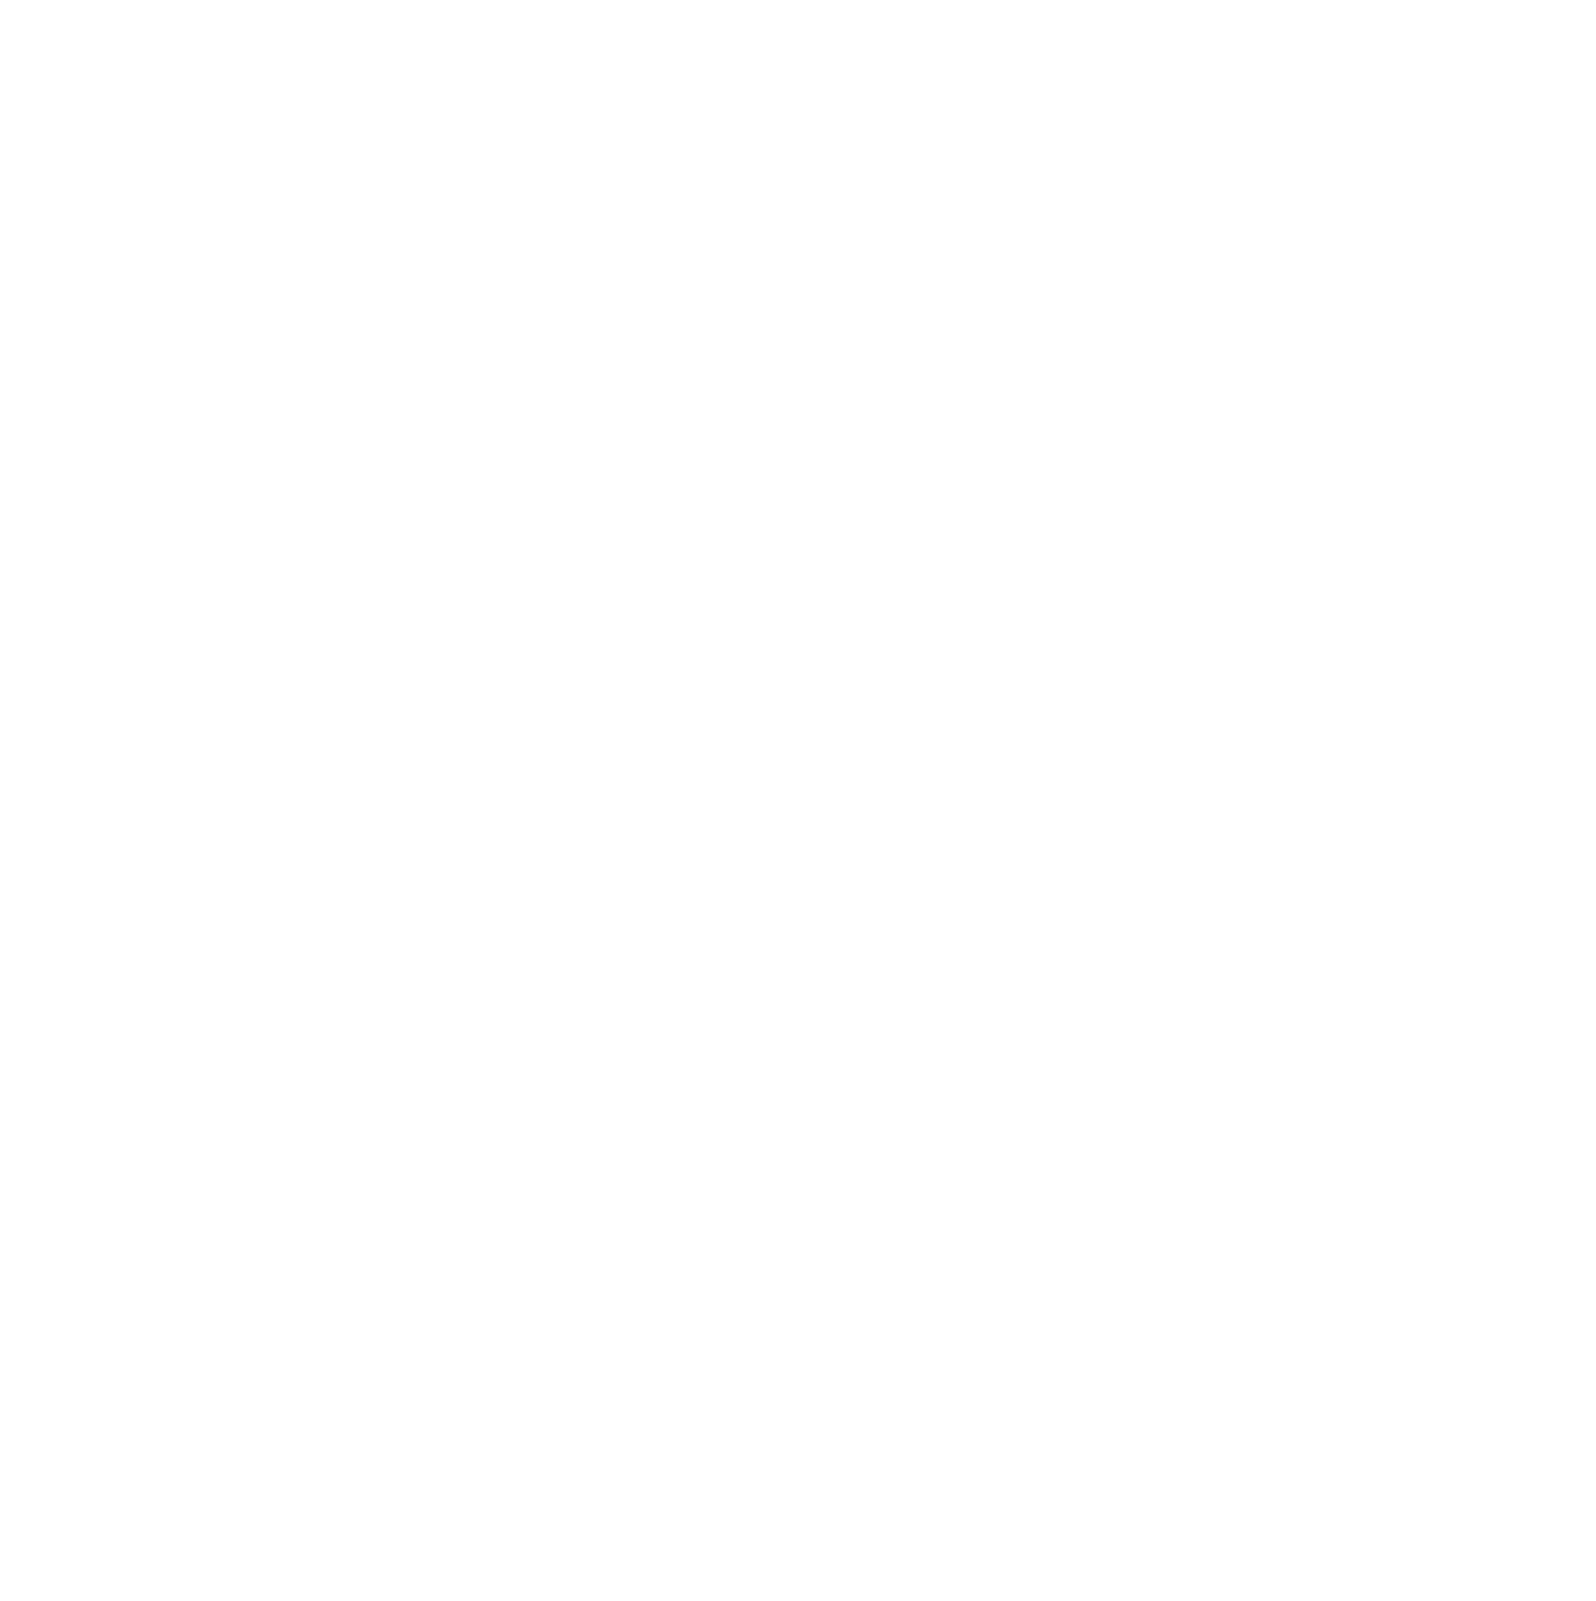 Söktas Tekstil Logo groß für dunkle Hintergründe (transparentes PNG)